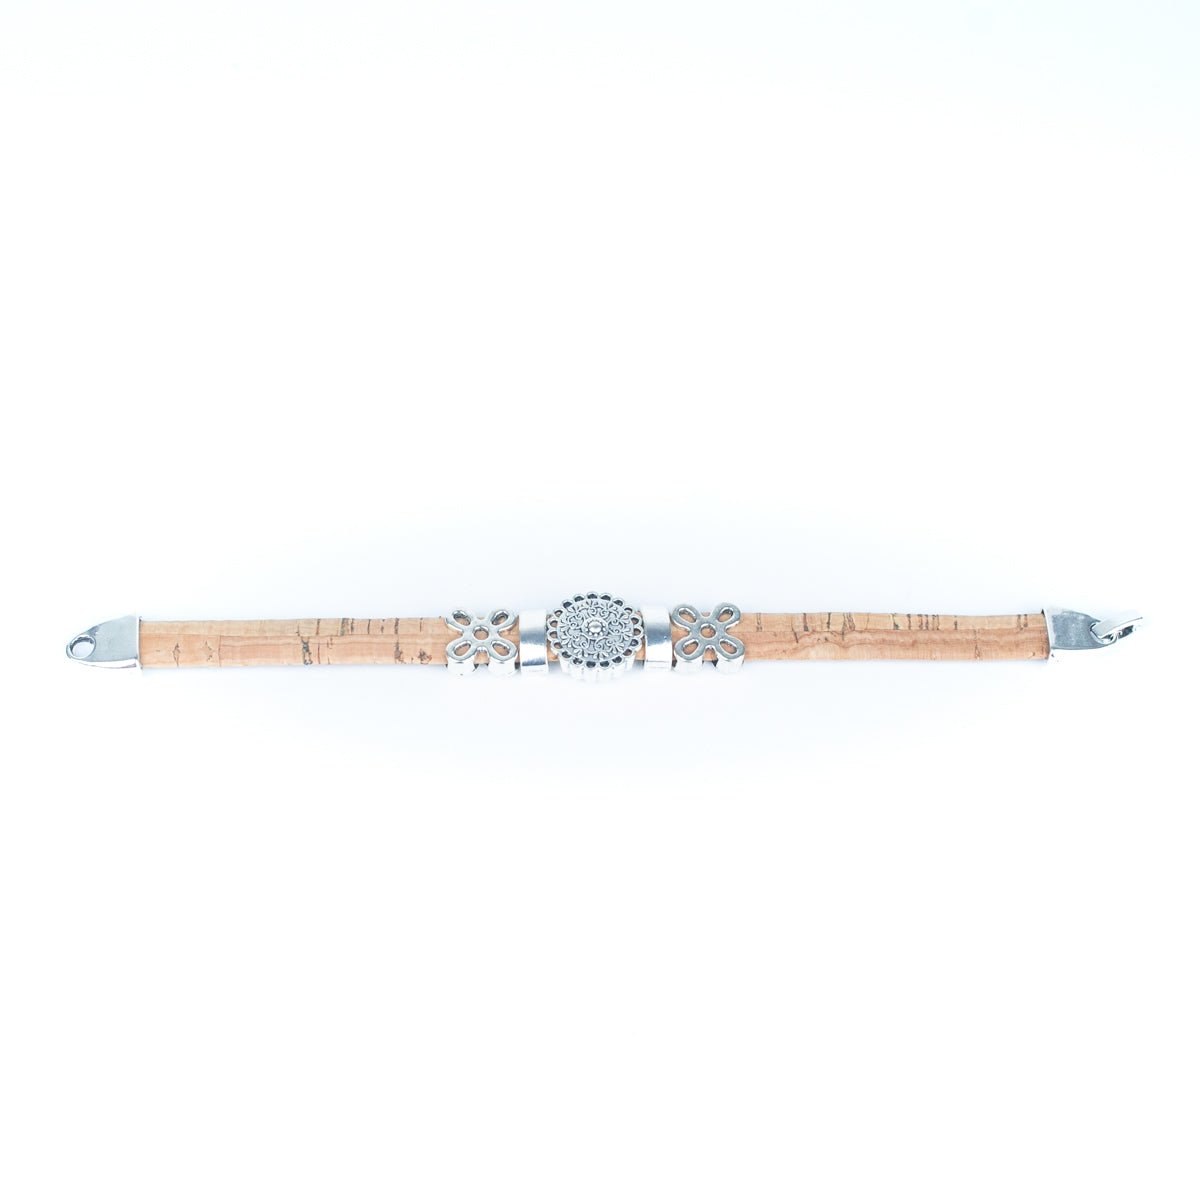 10mm Flat Colorful Cork Cord w/ Accessories Handmade Bracelet DBR-038-MIX-5